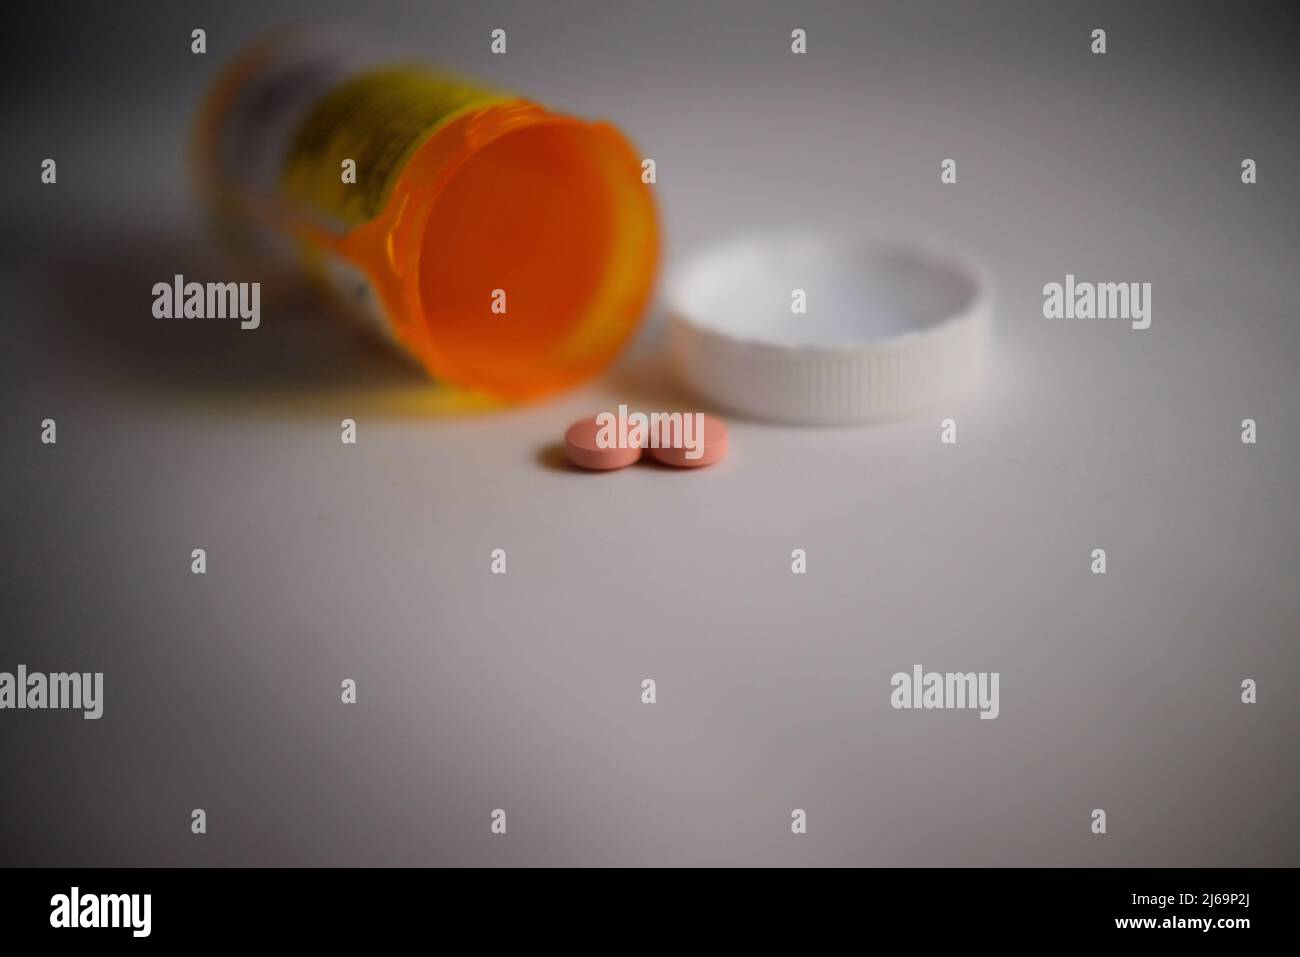 Soft-focus fallen medicine bottle and pills. Stock Photo